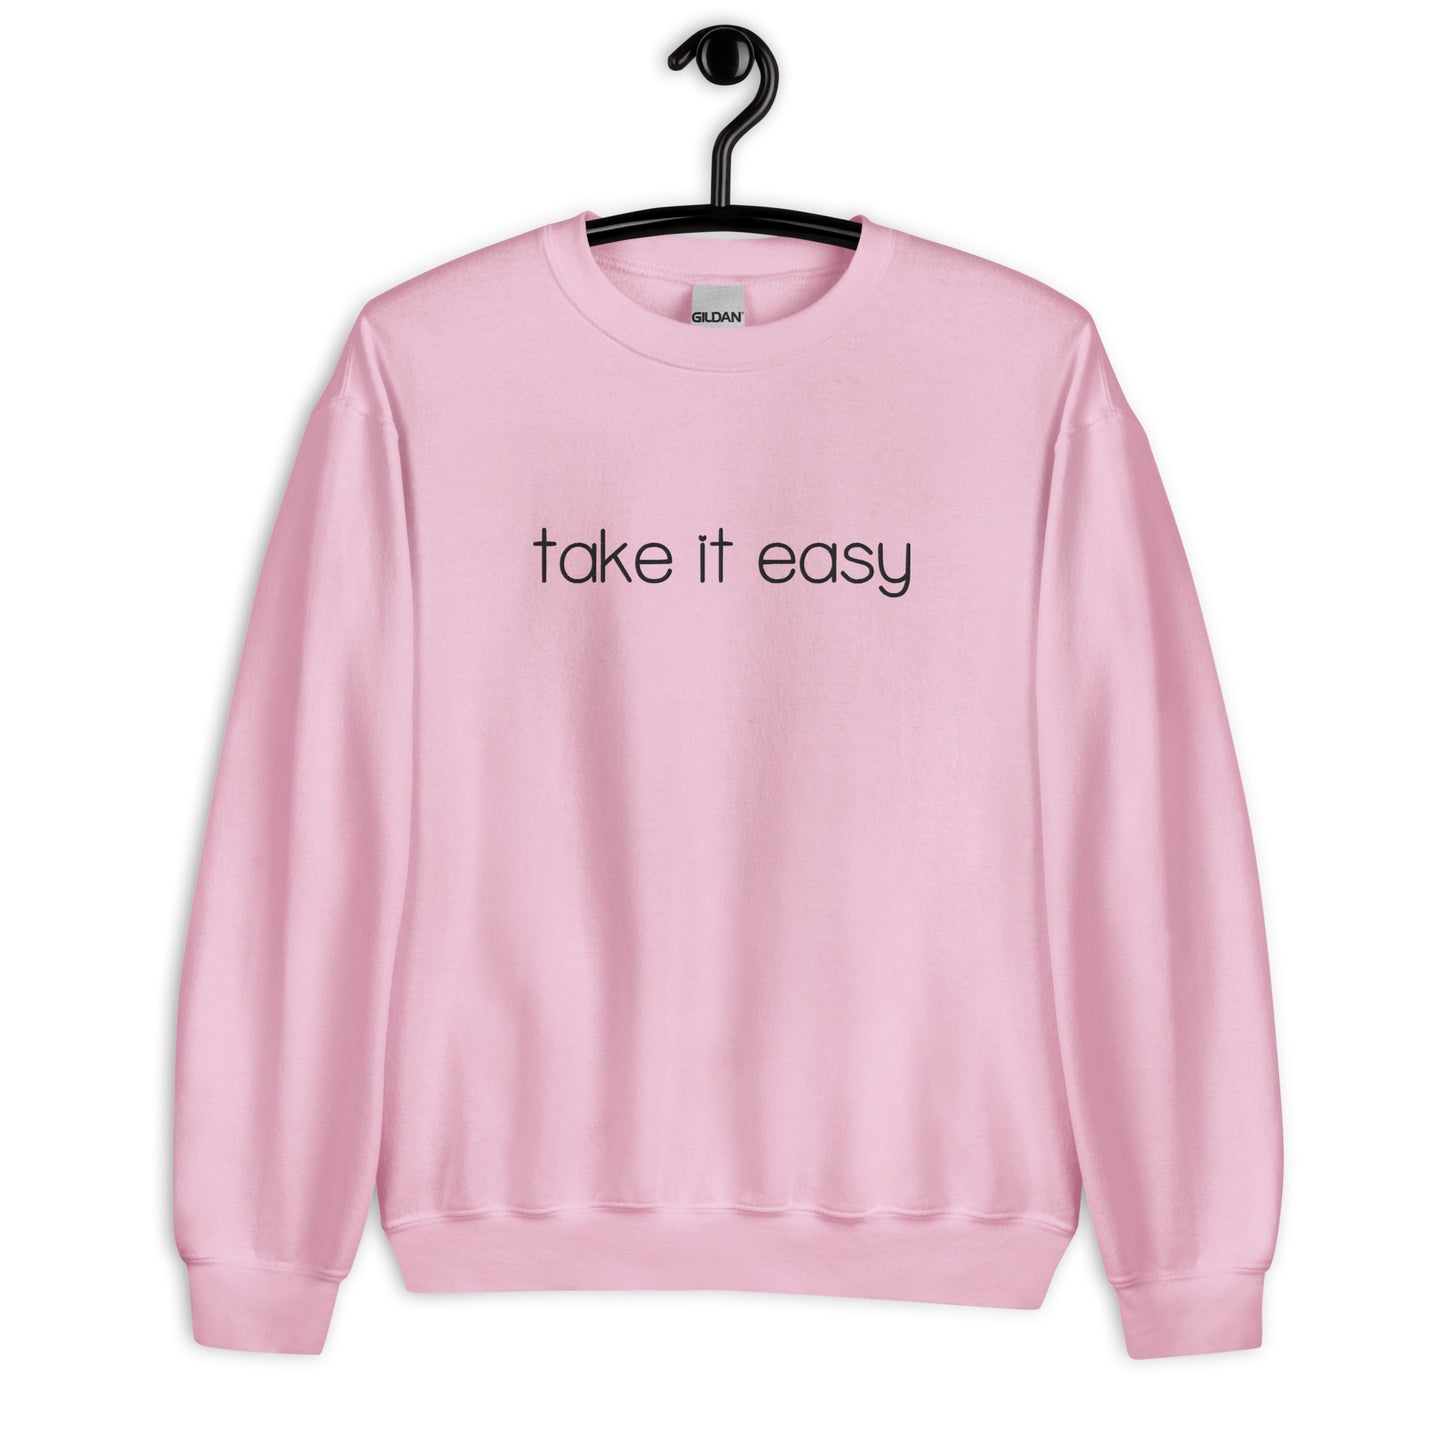 Take It Easy Embroidered Sweatshirt